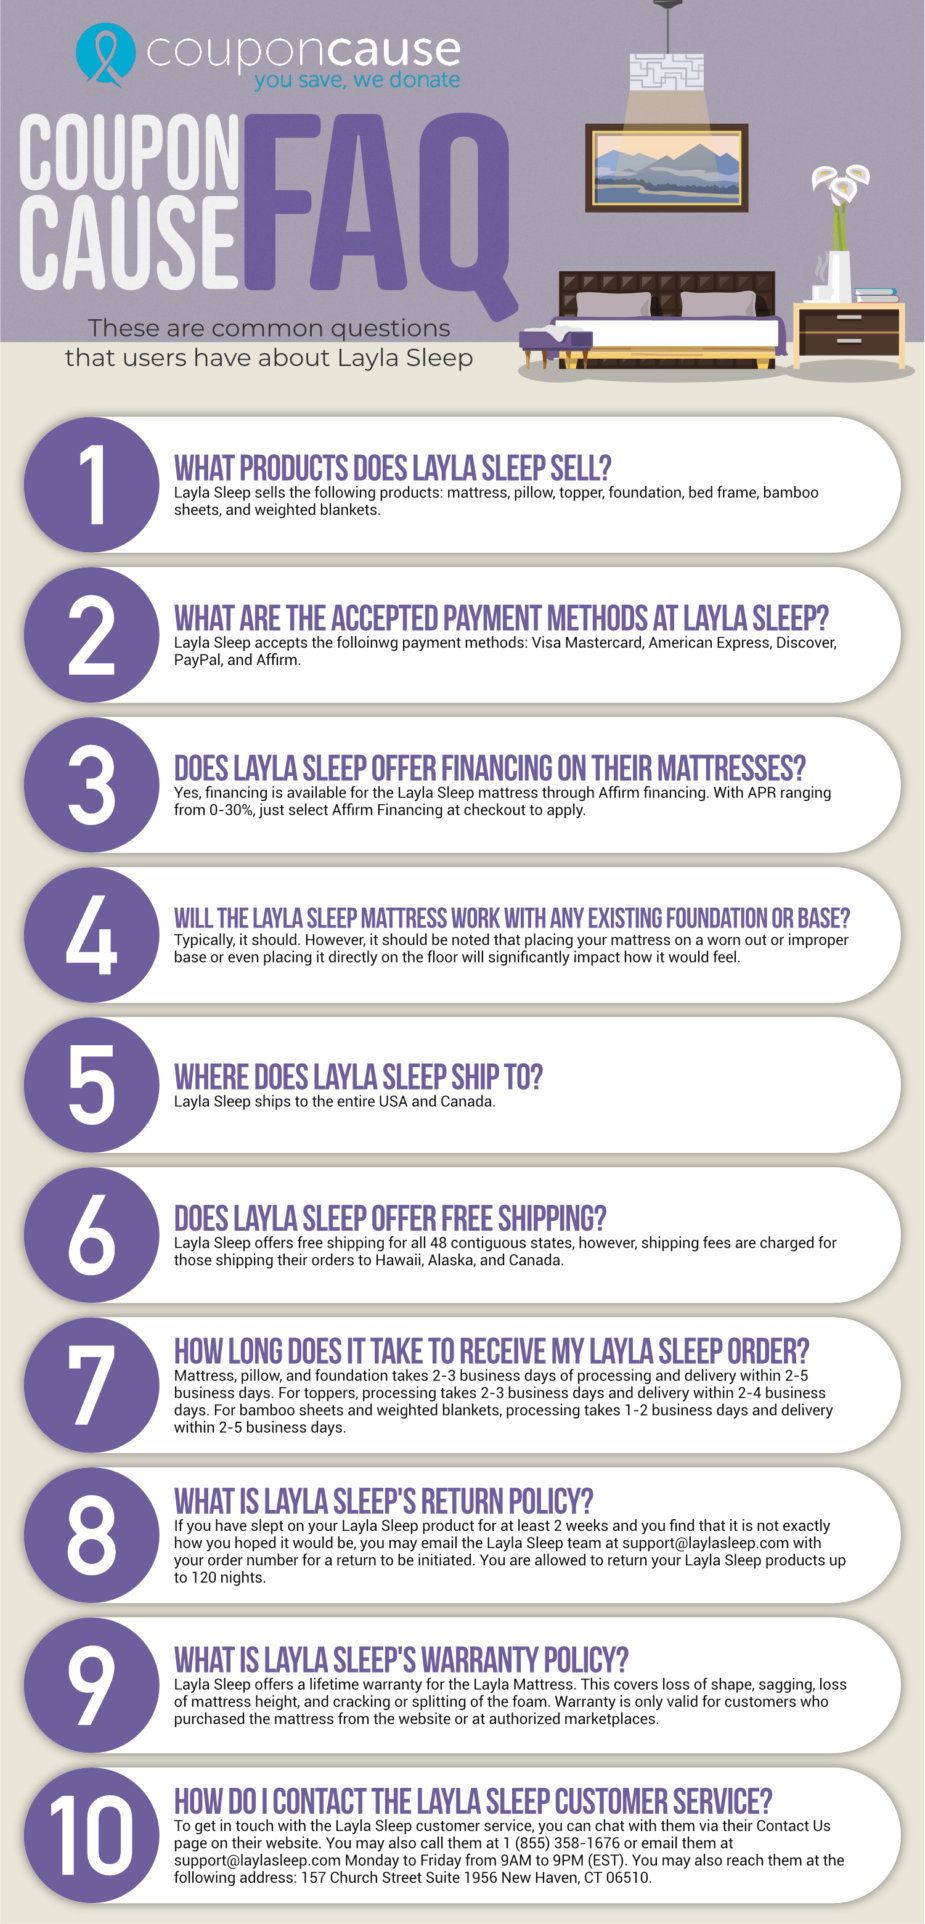 Layla Sleep Coupon Cause FAQ (C.C. FAQ)